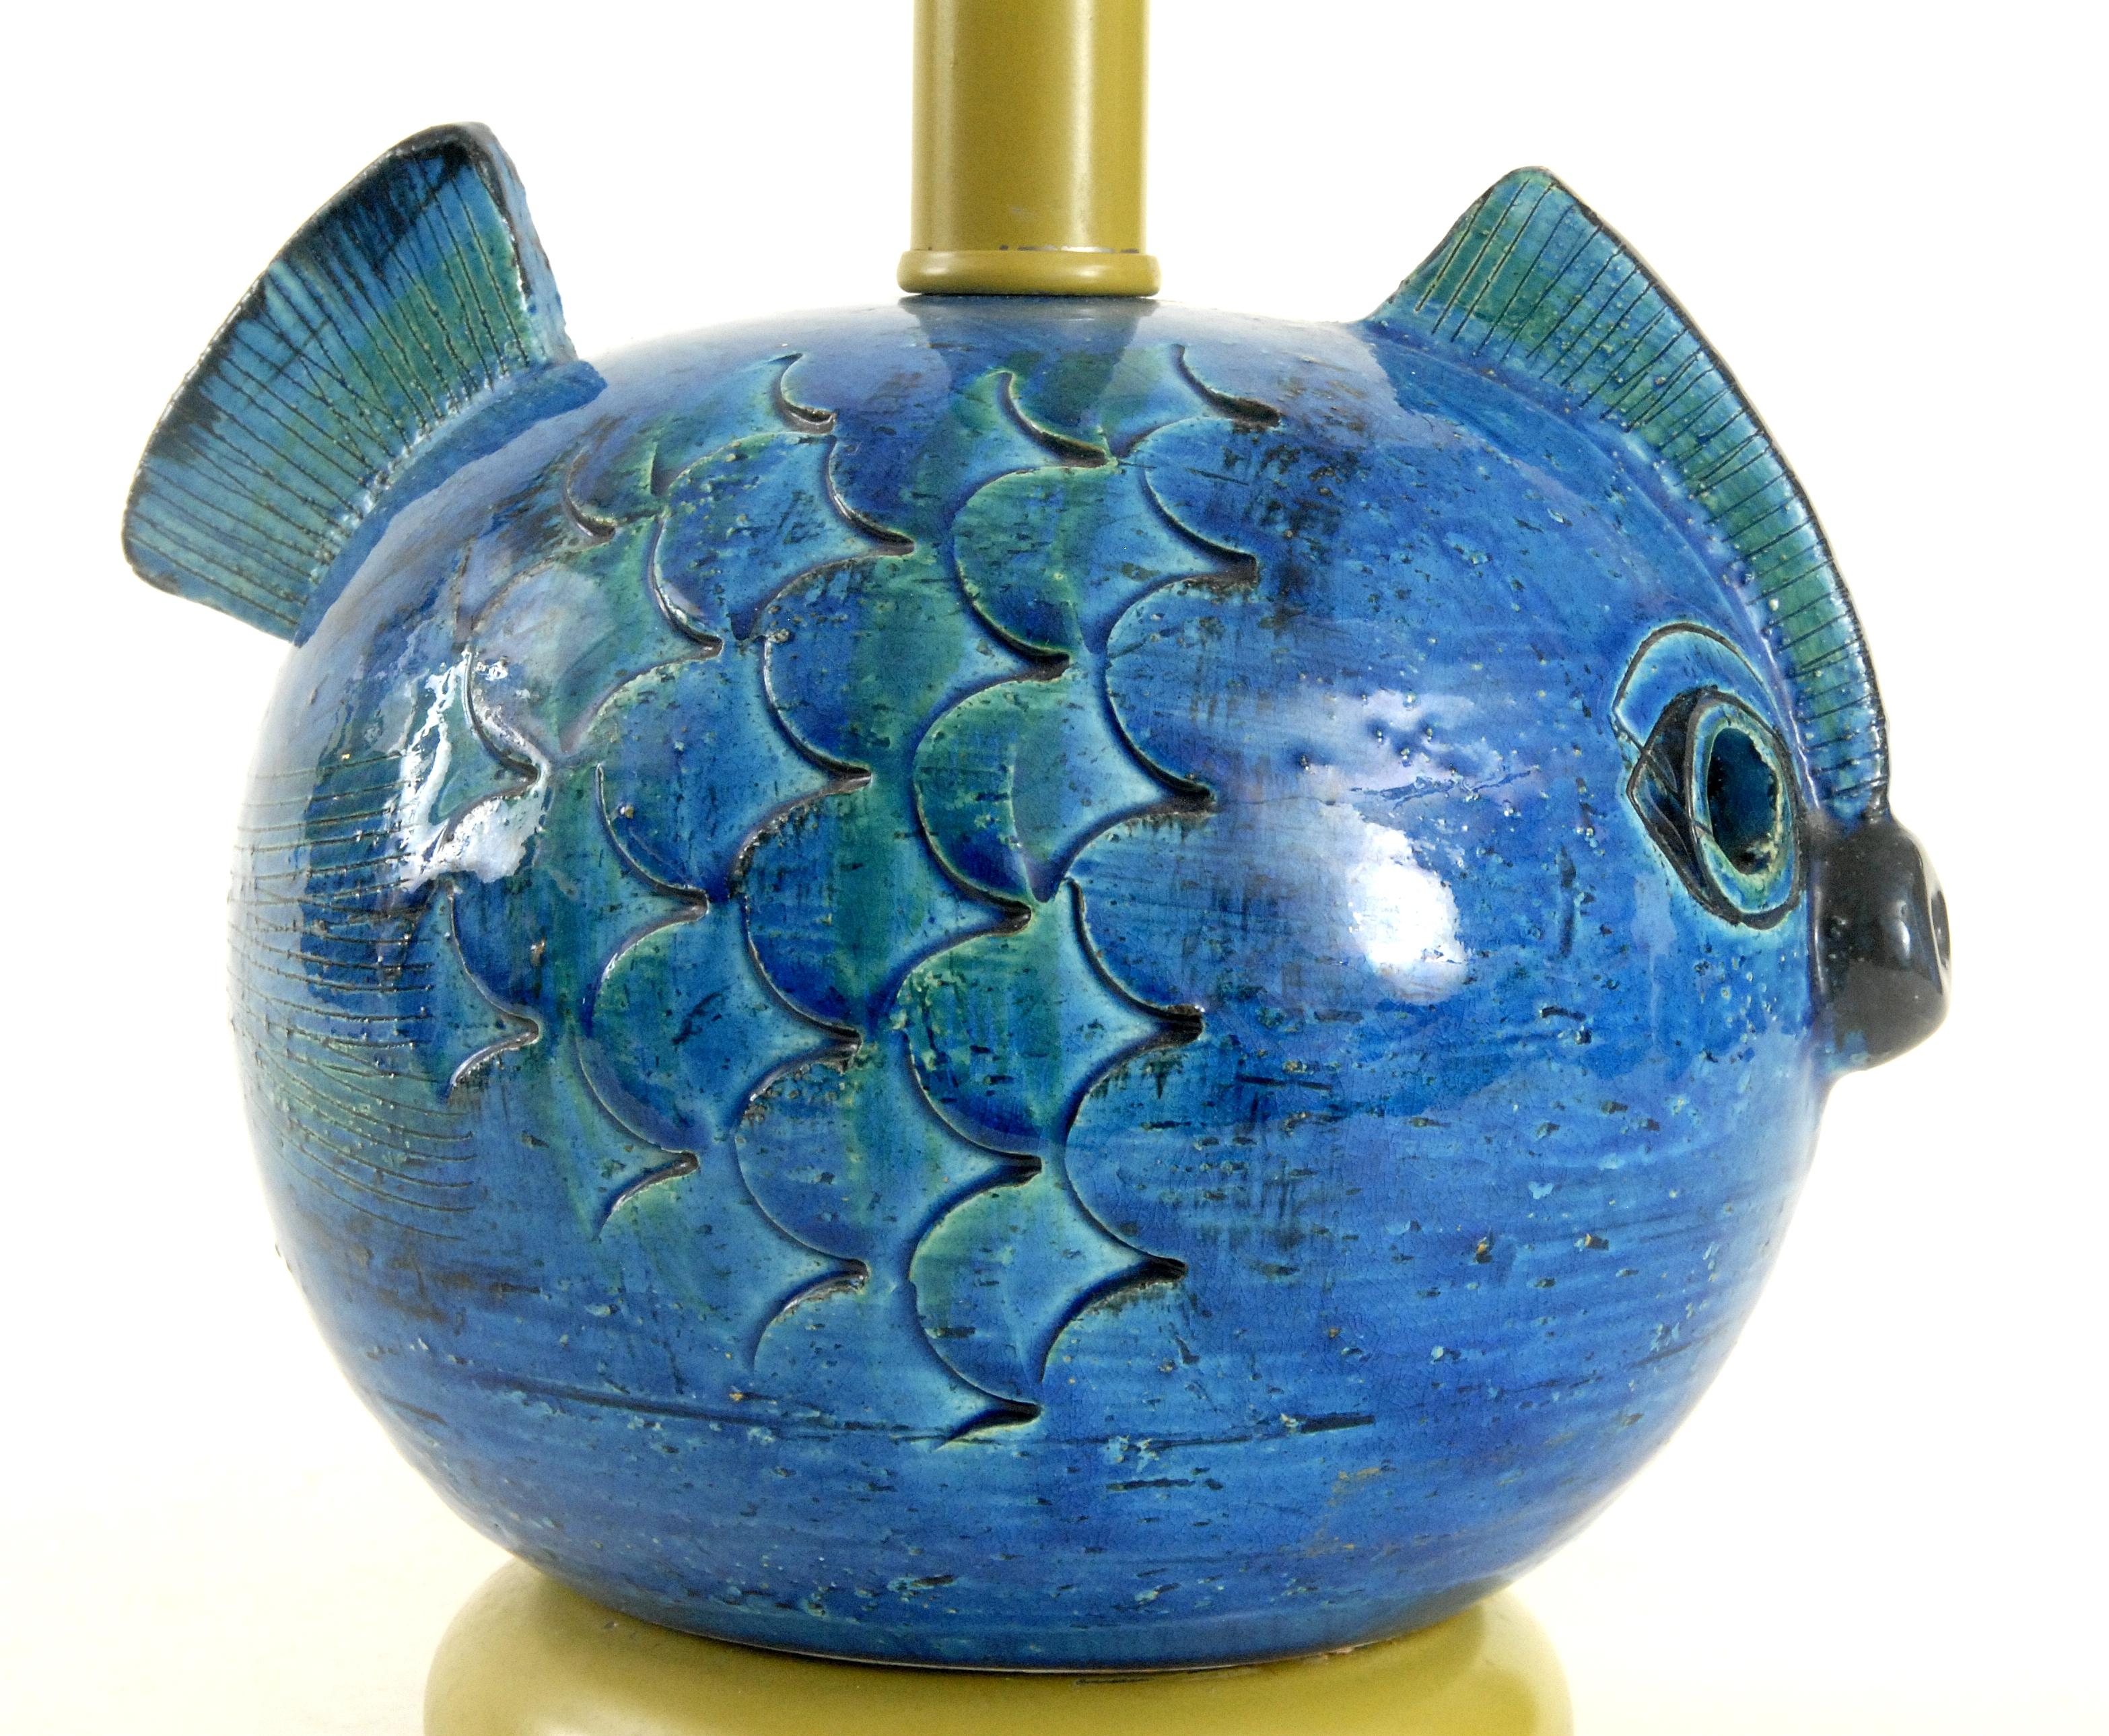 Hand-Crafted Bitossi Aldo Londi Fish Lamp, Italy, circa 1968